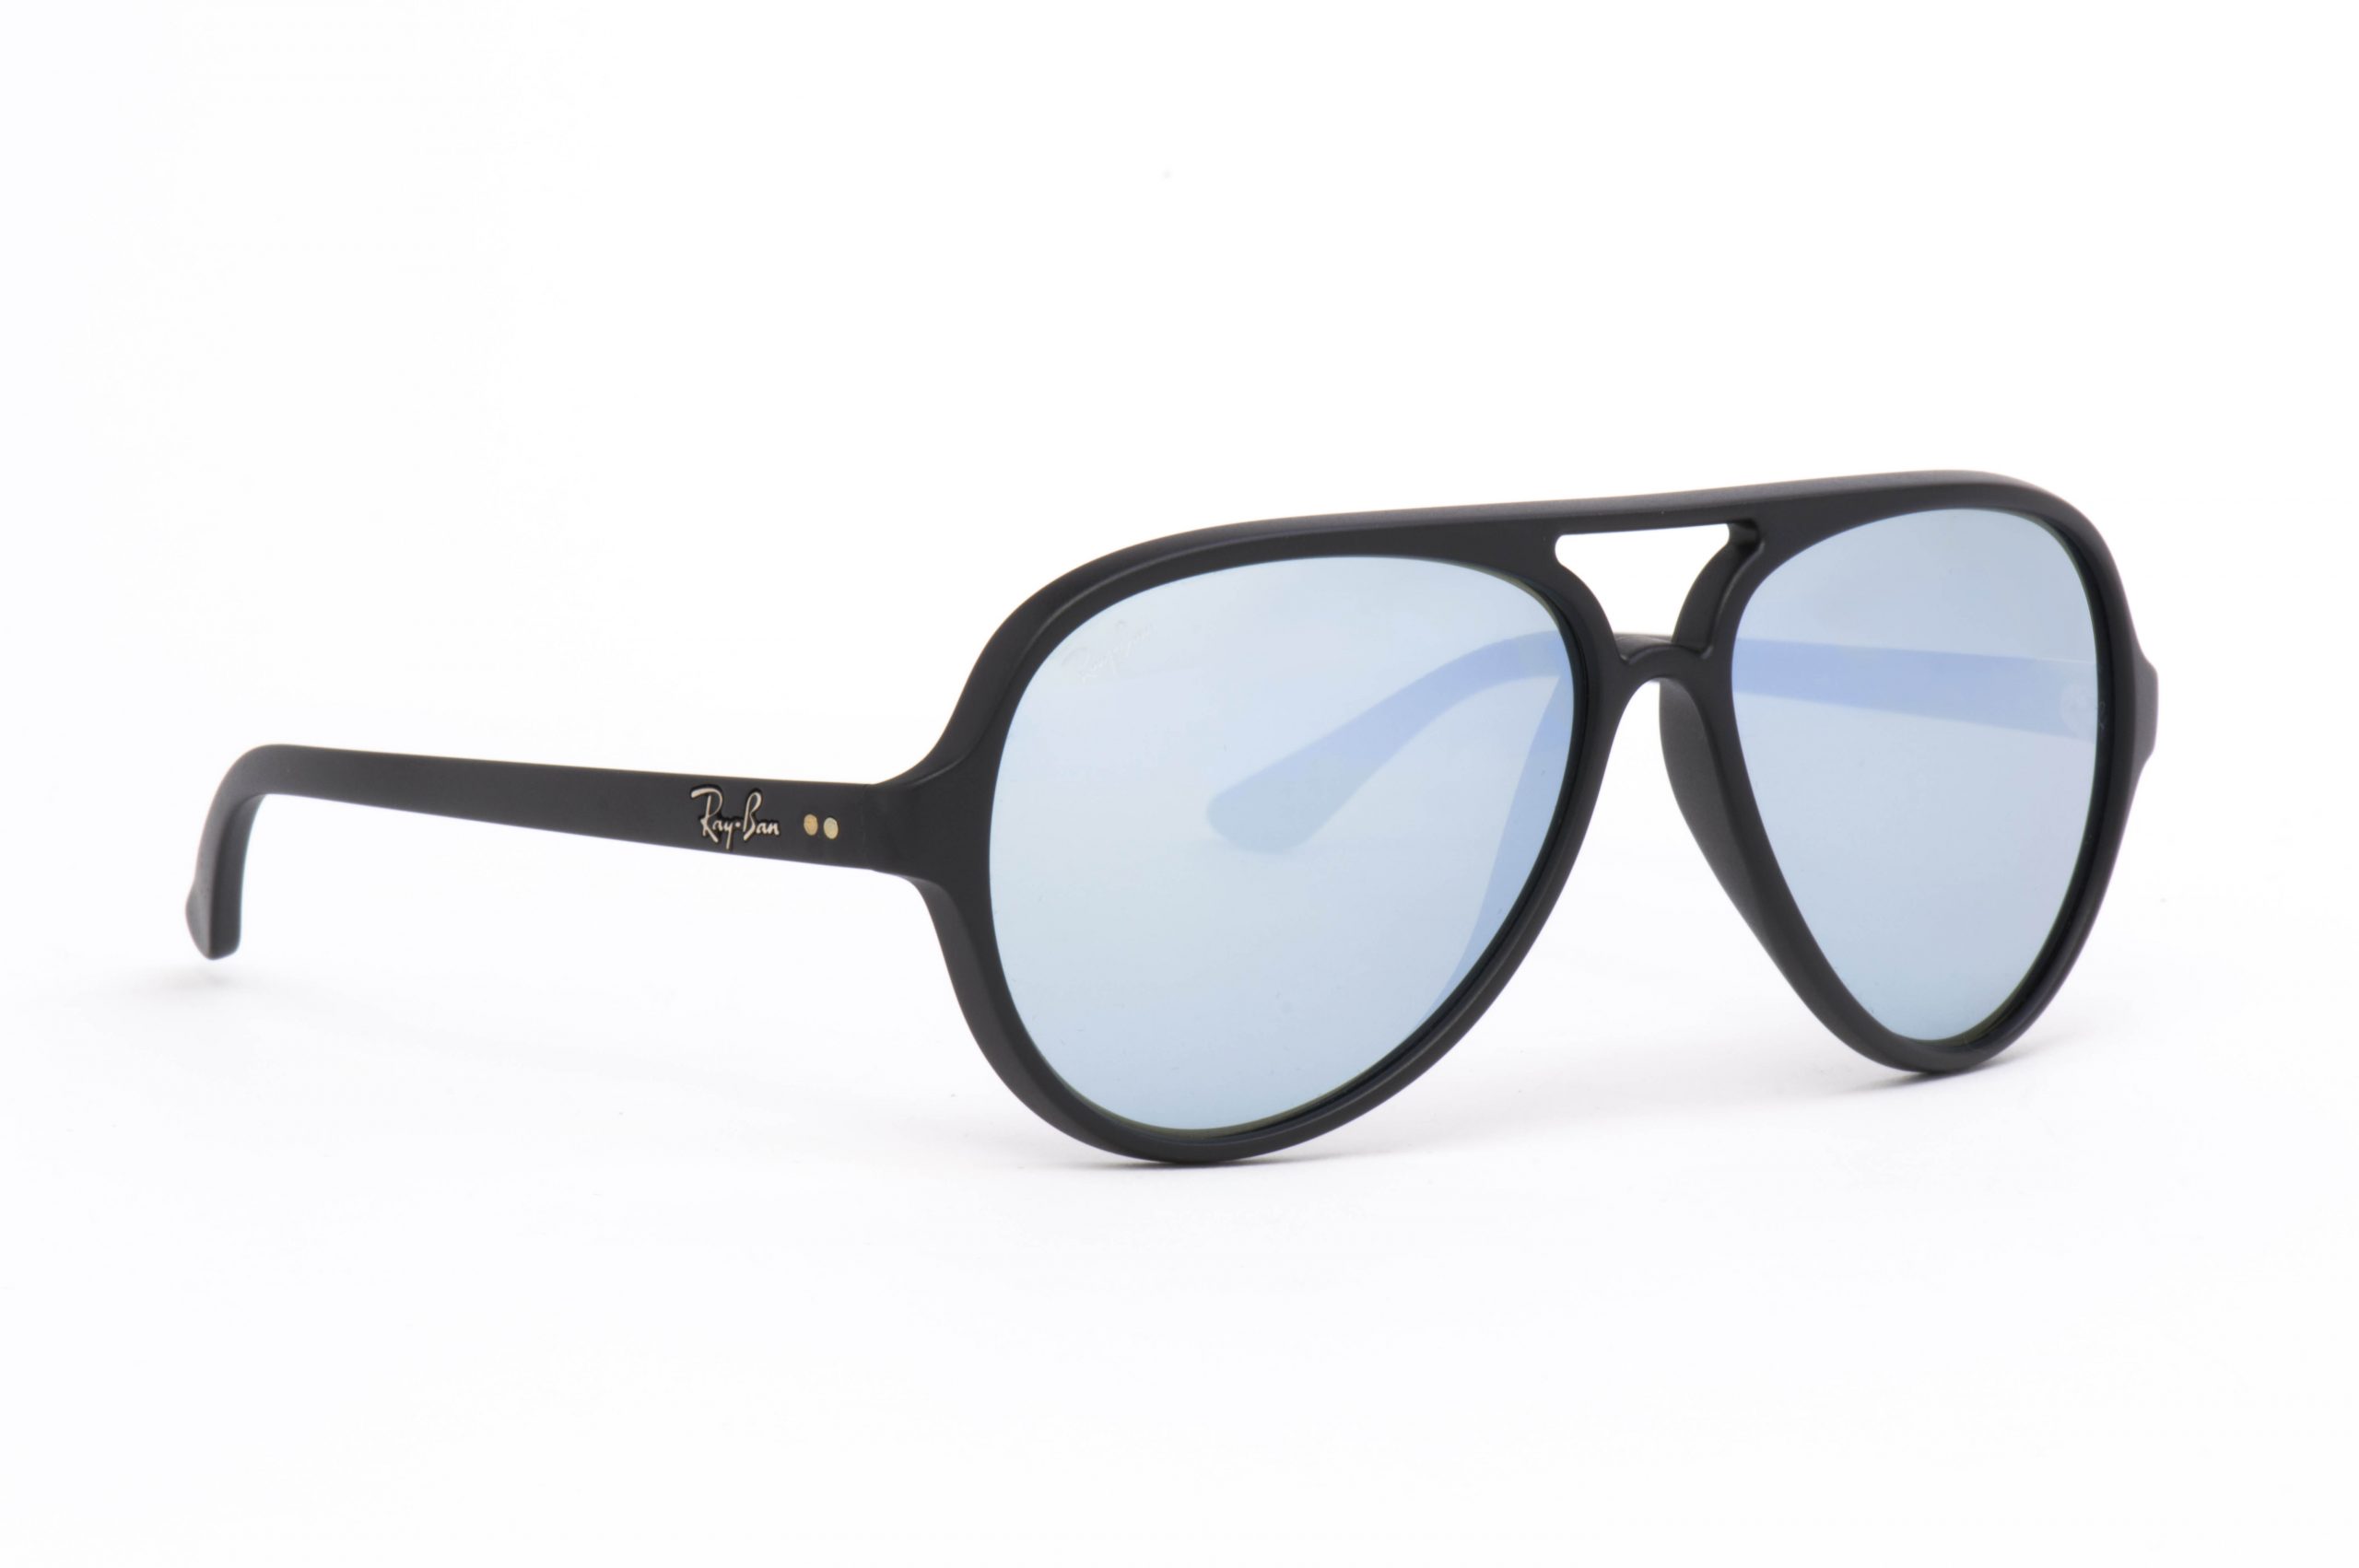 RAYBAN Sunglasses CATS 5000 CLASSIC RB 4125 601-S/30 Blue | عالم النظارات  السعودية